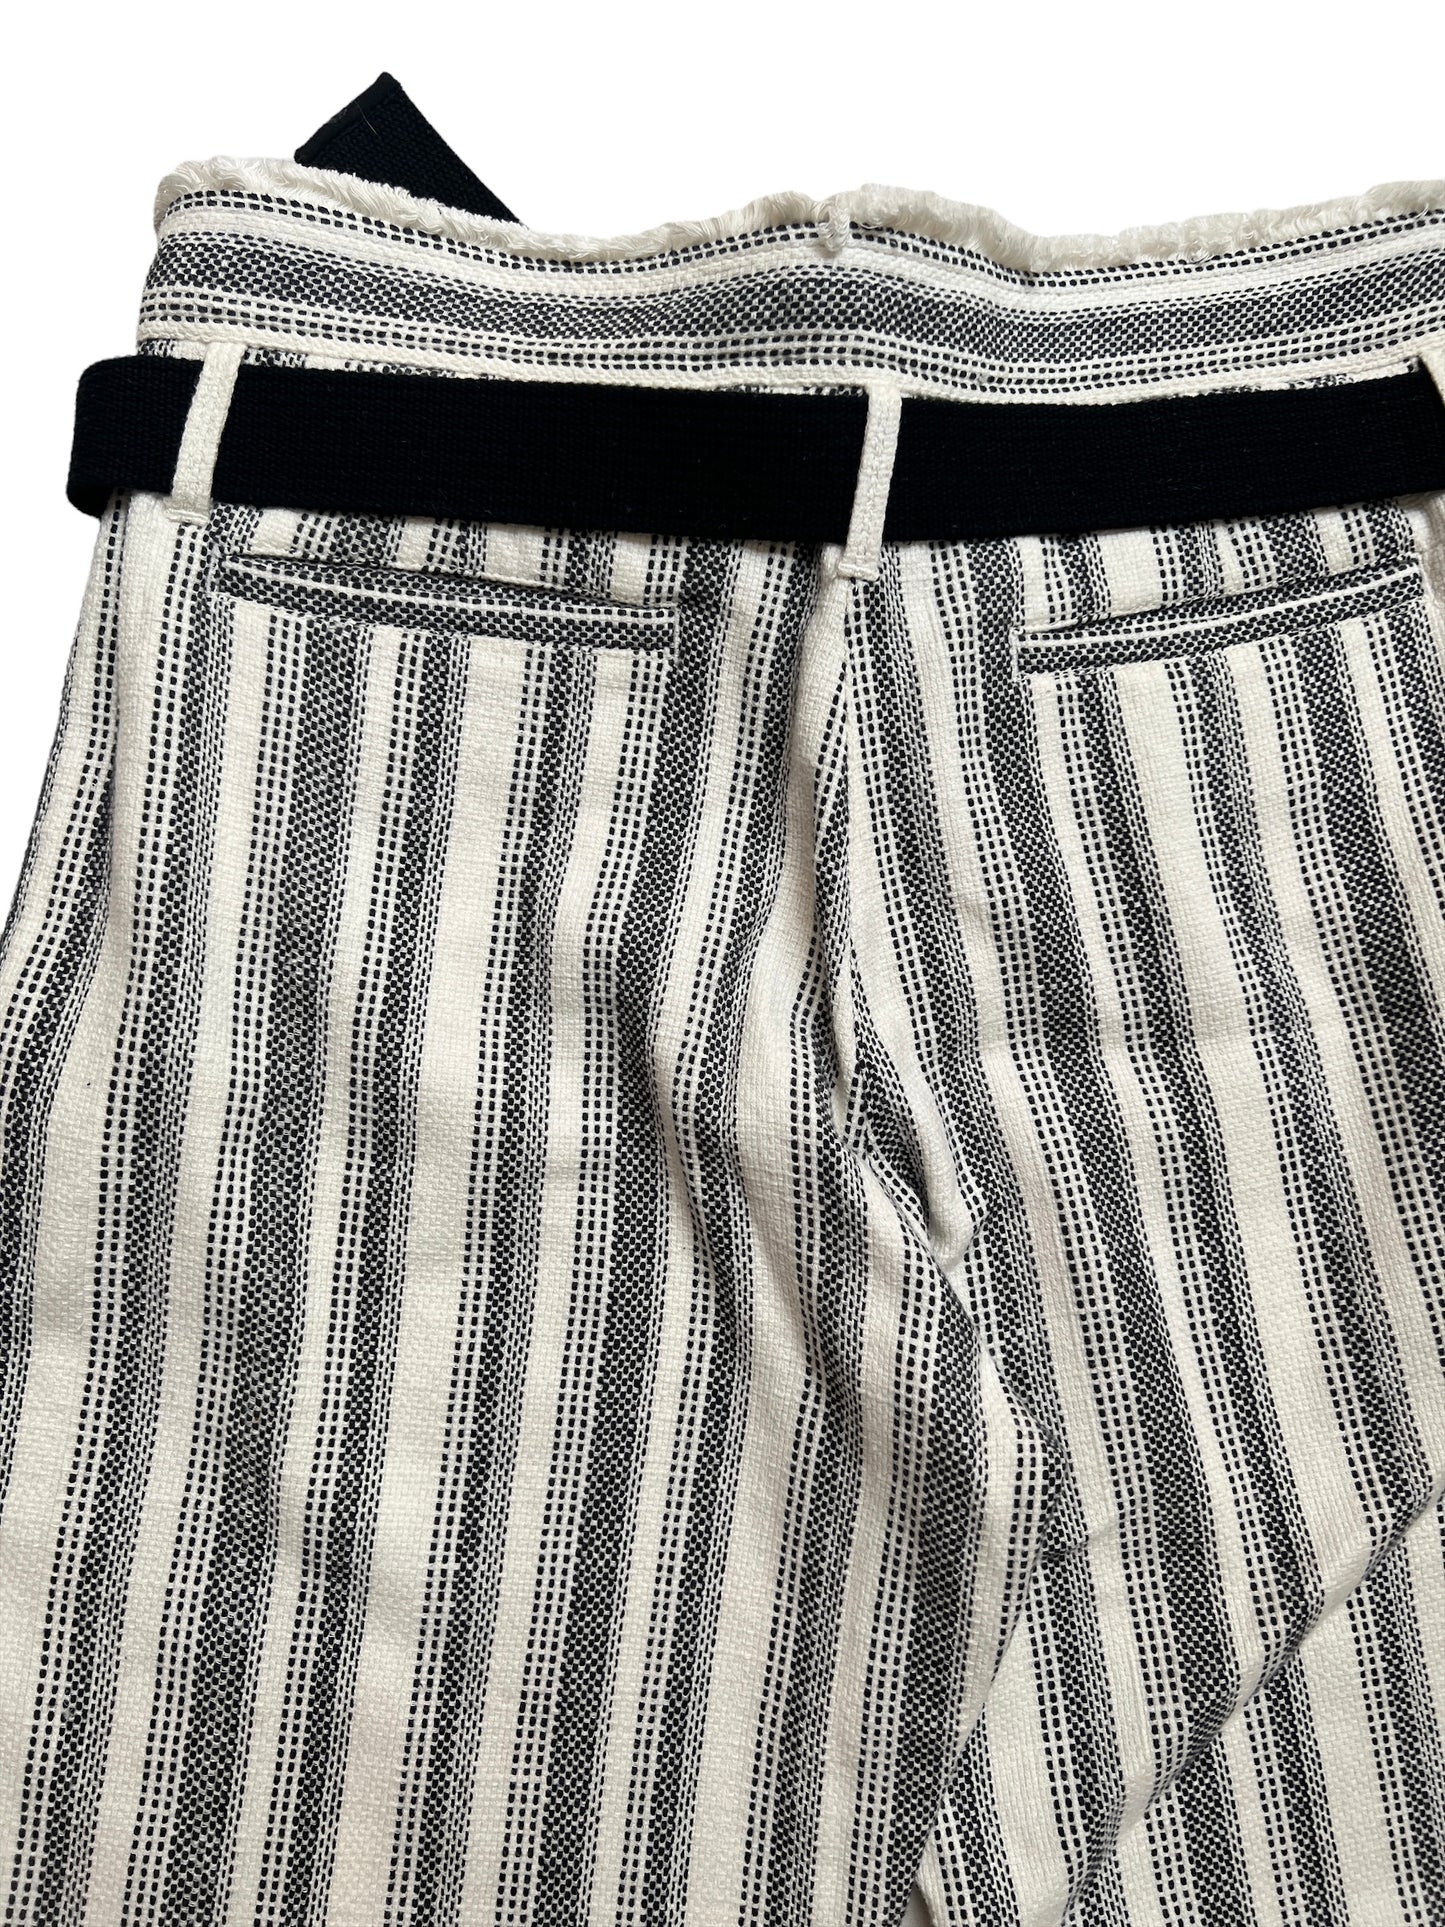 Black & White Cotton Pants with Belt - M